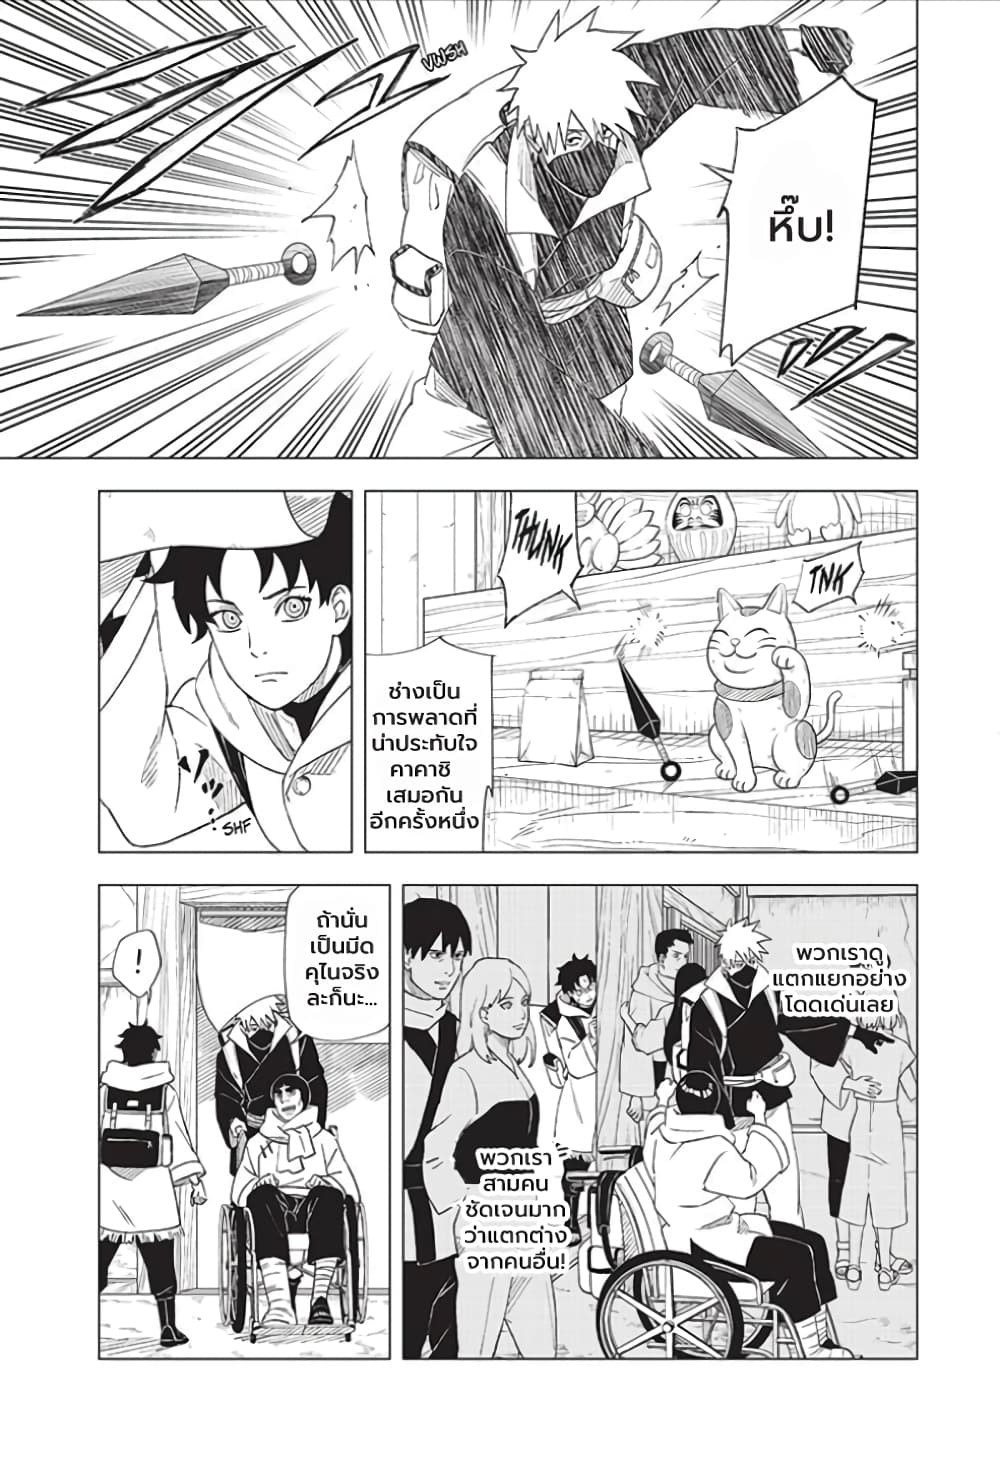 Naruto Konoha’s Story – The Steam Ninja Scrolls The Manga ตอนที่ 3 (3)